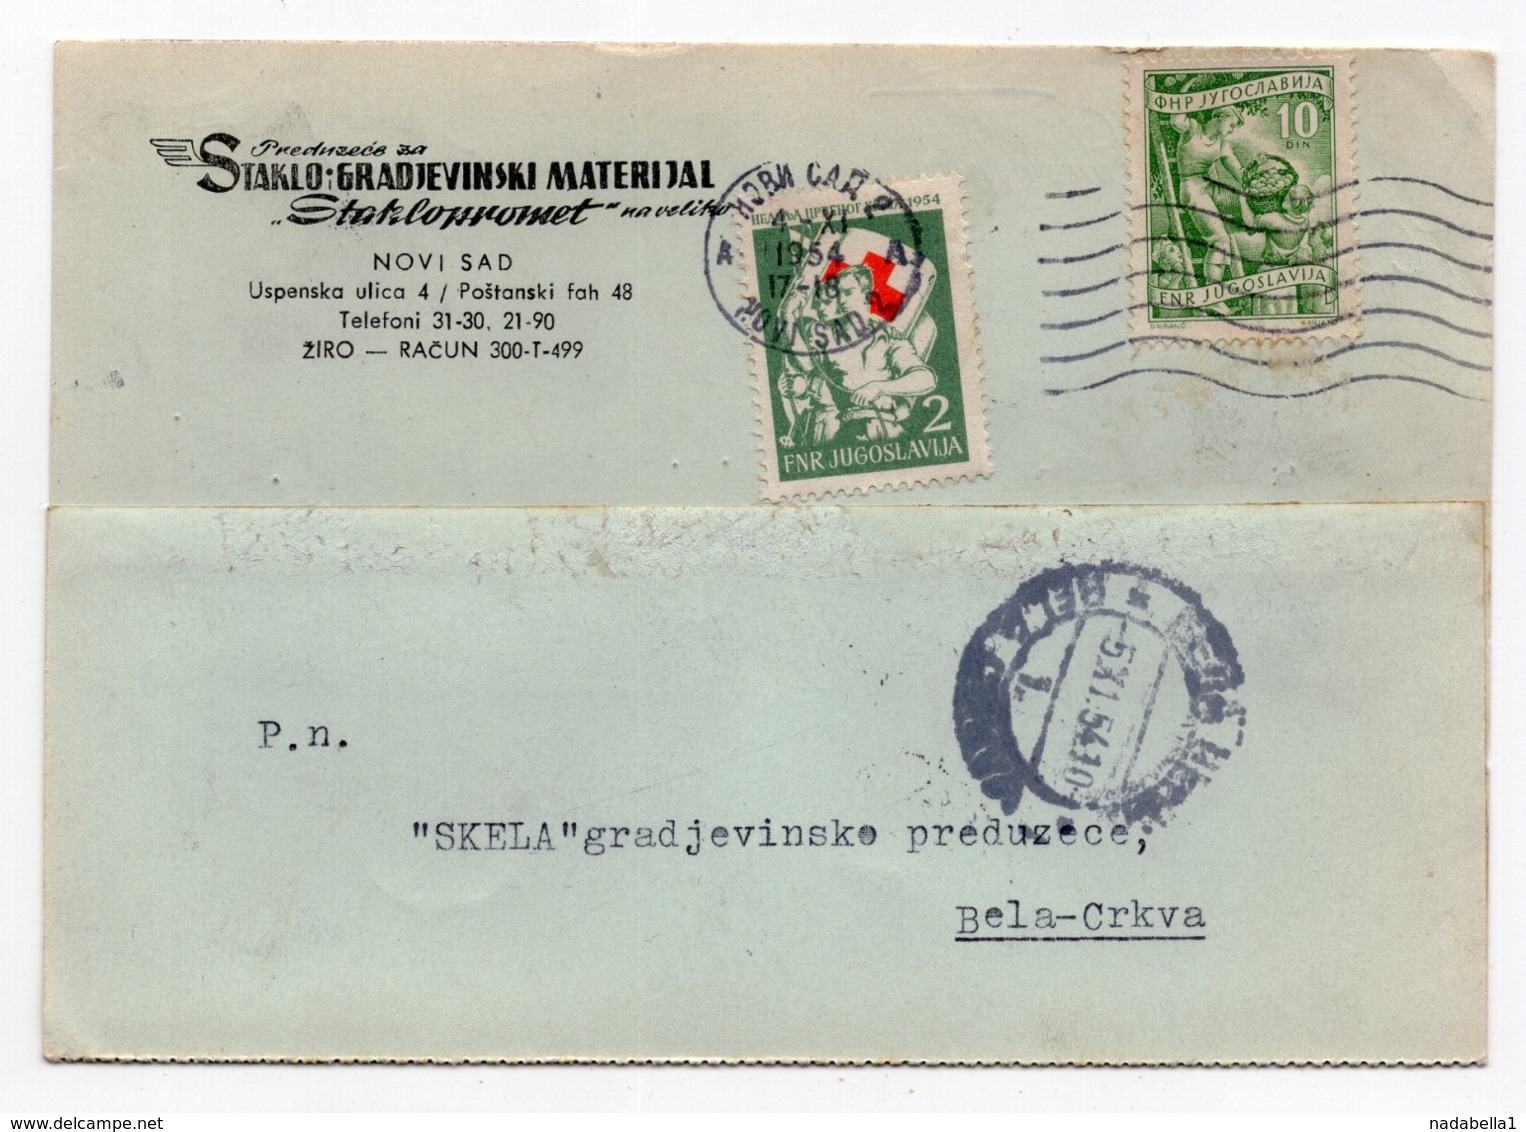 1954 YUGOSLAVIA, SERBIA, NOVI SAD TO BELA CRKVA, CORRESPONDENCE CARD, RED CROSS ADDITIONAL STAMP - Covers & Documents